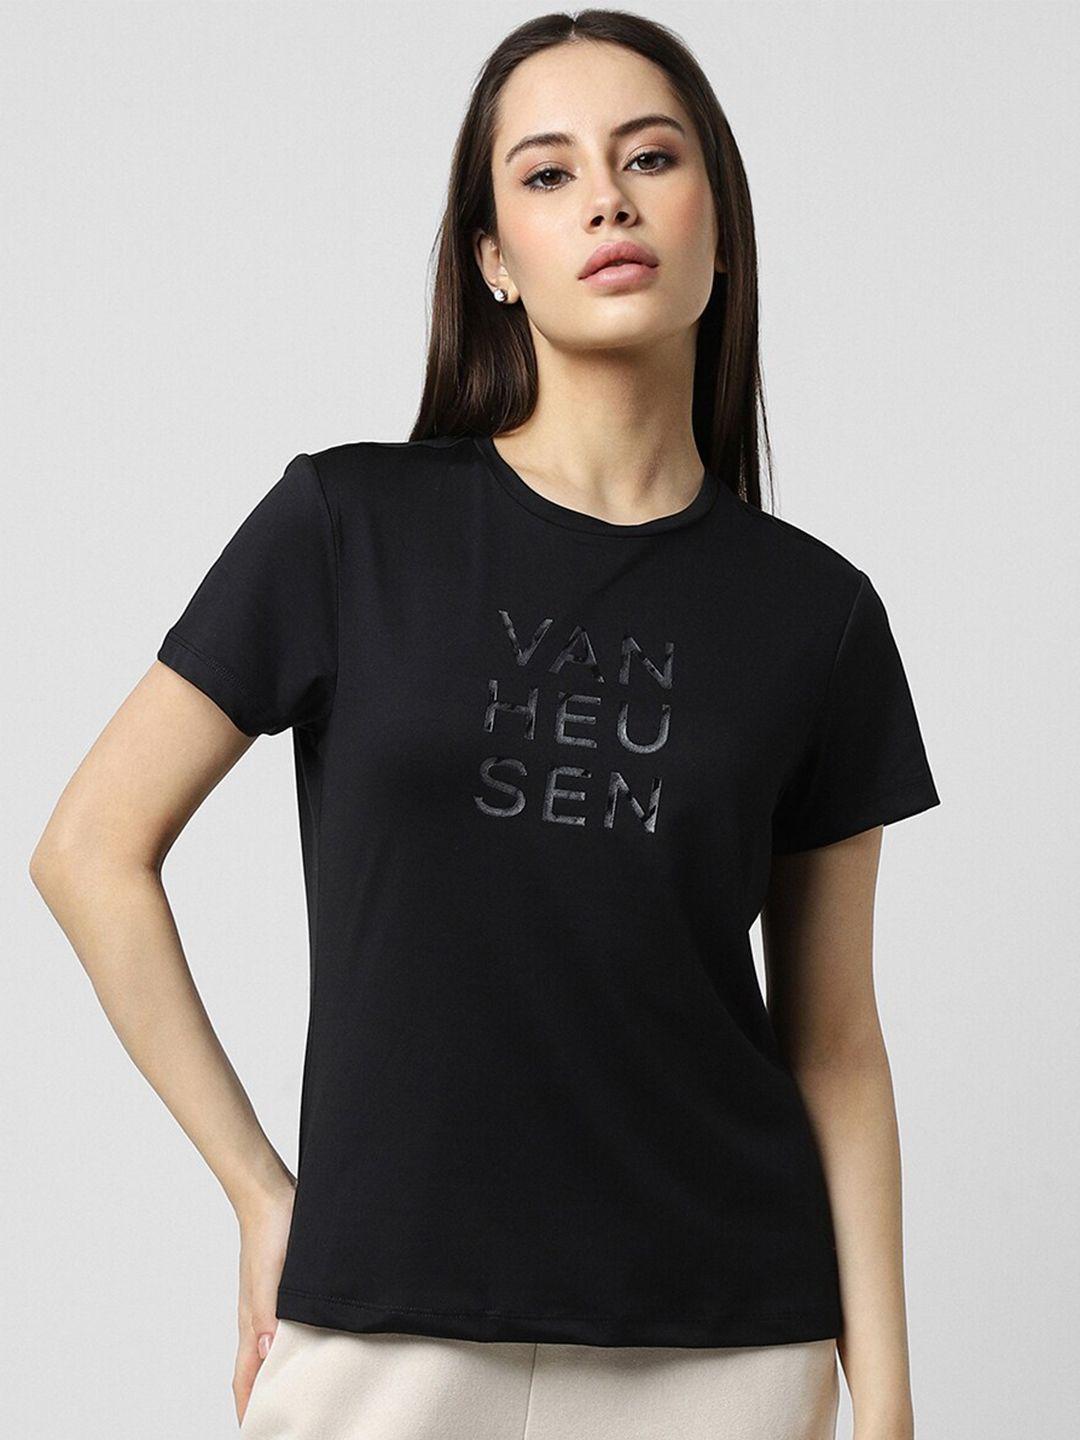 van-heusen-woman-brand-logo-printed-t-shirt